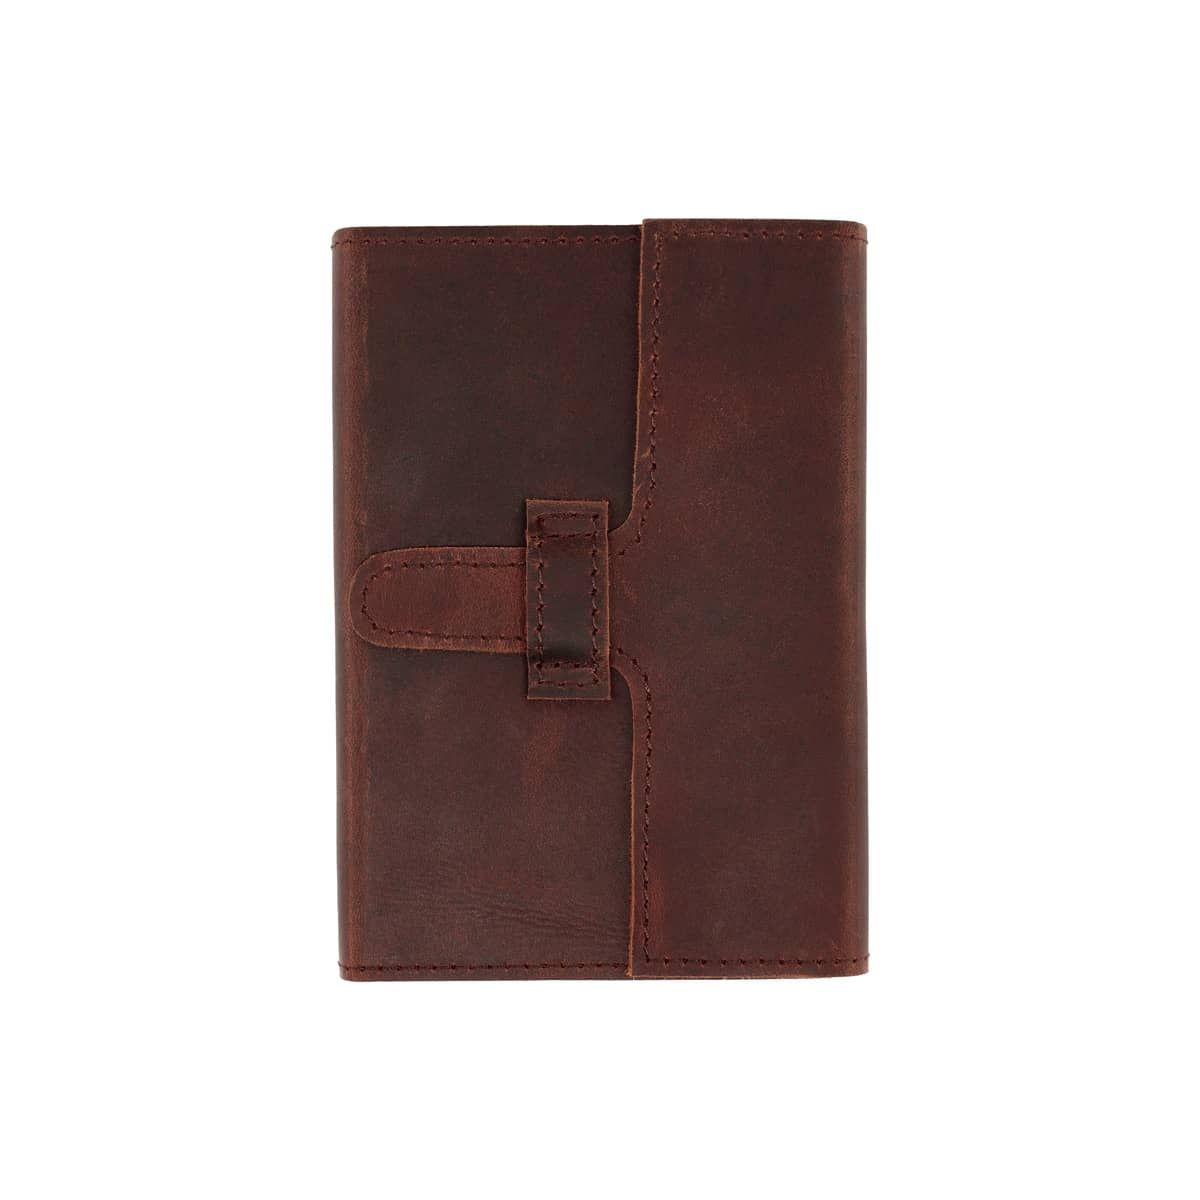 Dark Brown Opus Genuine Leather Journals with Slide Closure - 4x6